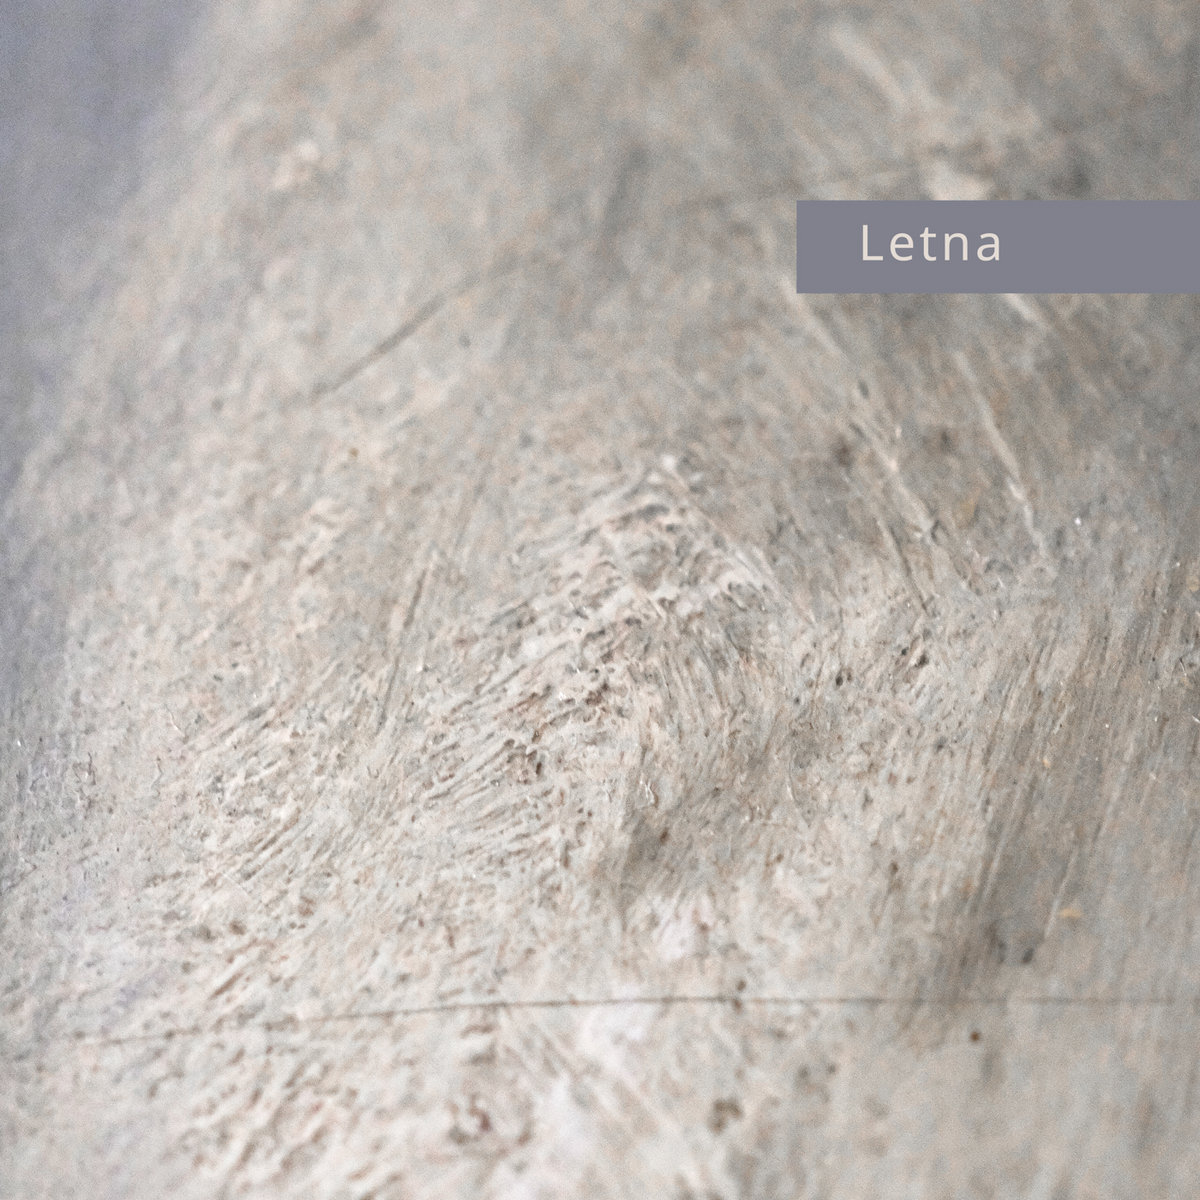 [album cover art] Letna – Gle​č​er